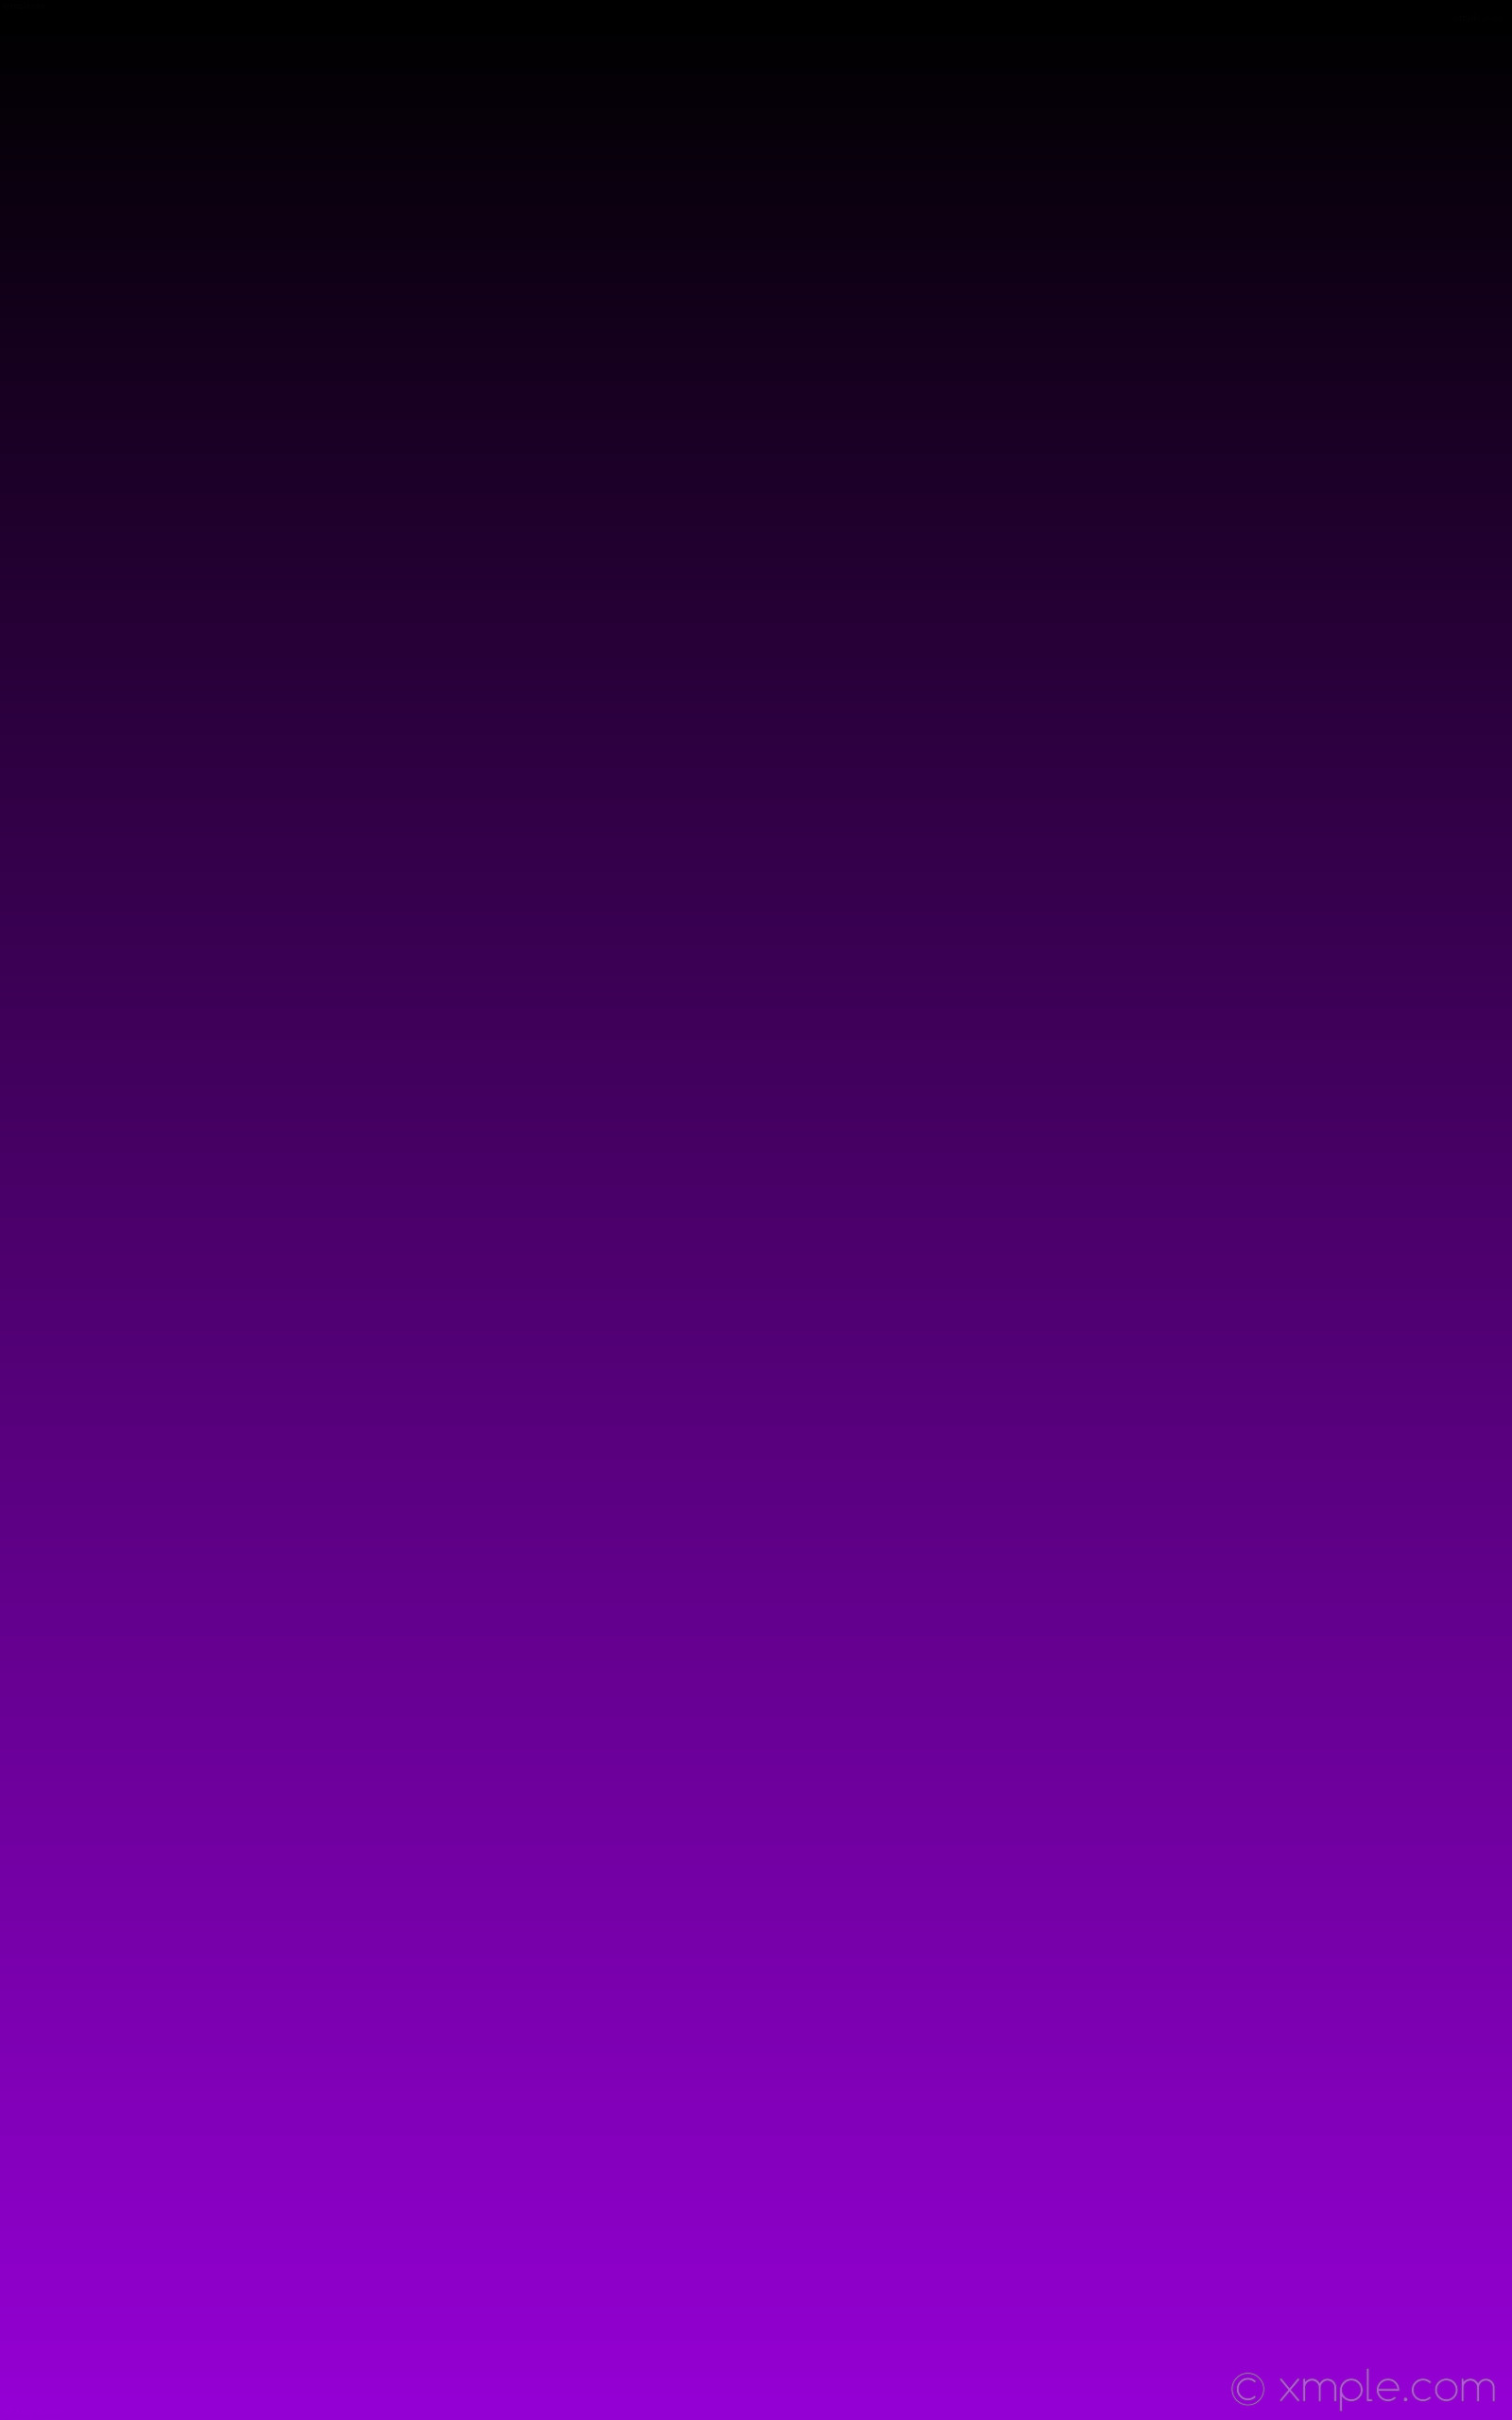 Purple Gradient Images  Free Download on Freepik